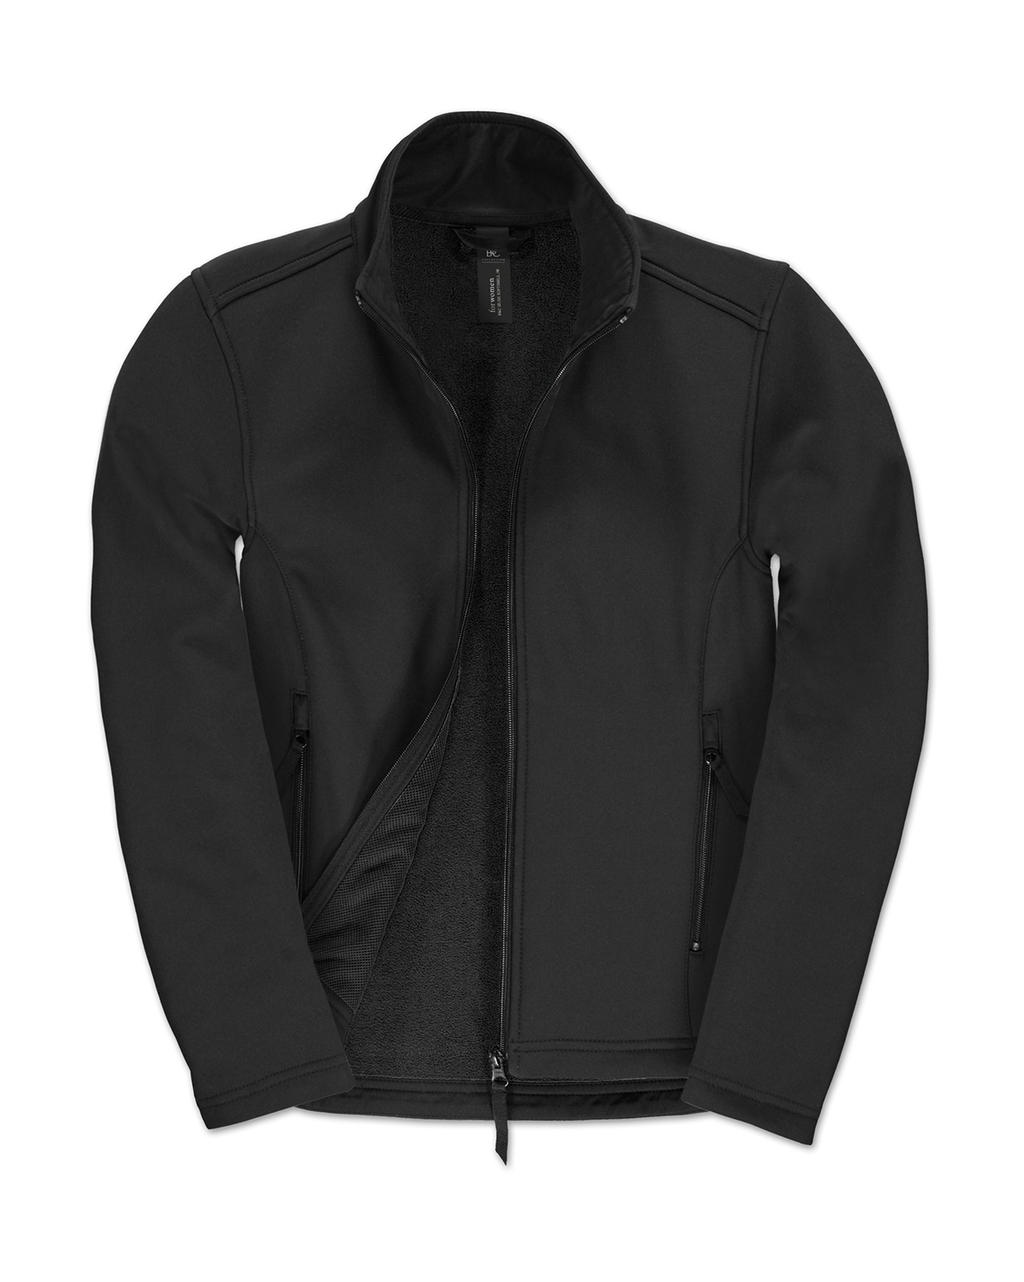  ID.701/women Softshell Jacket  in Farbe Black/Black